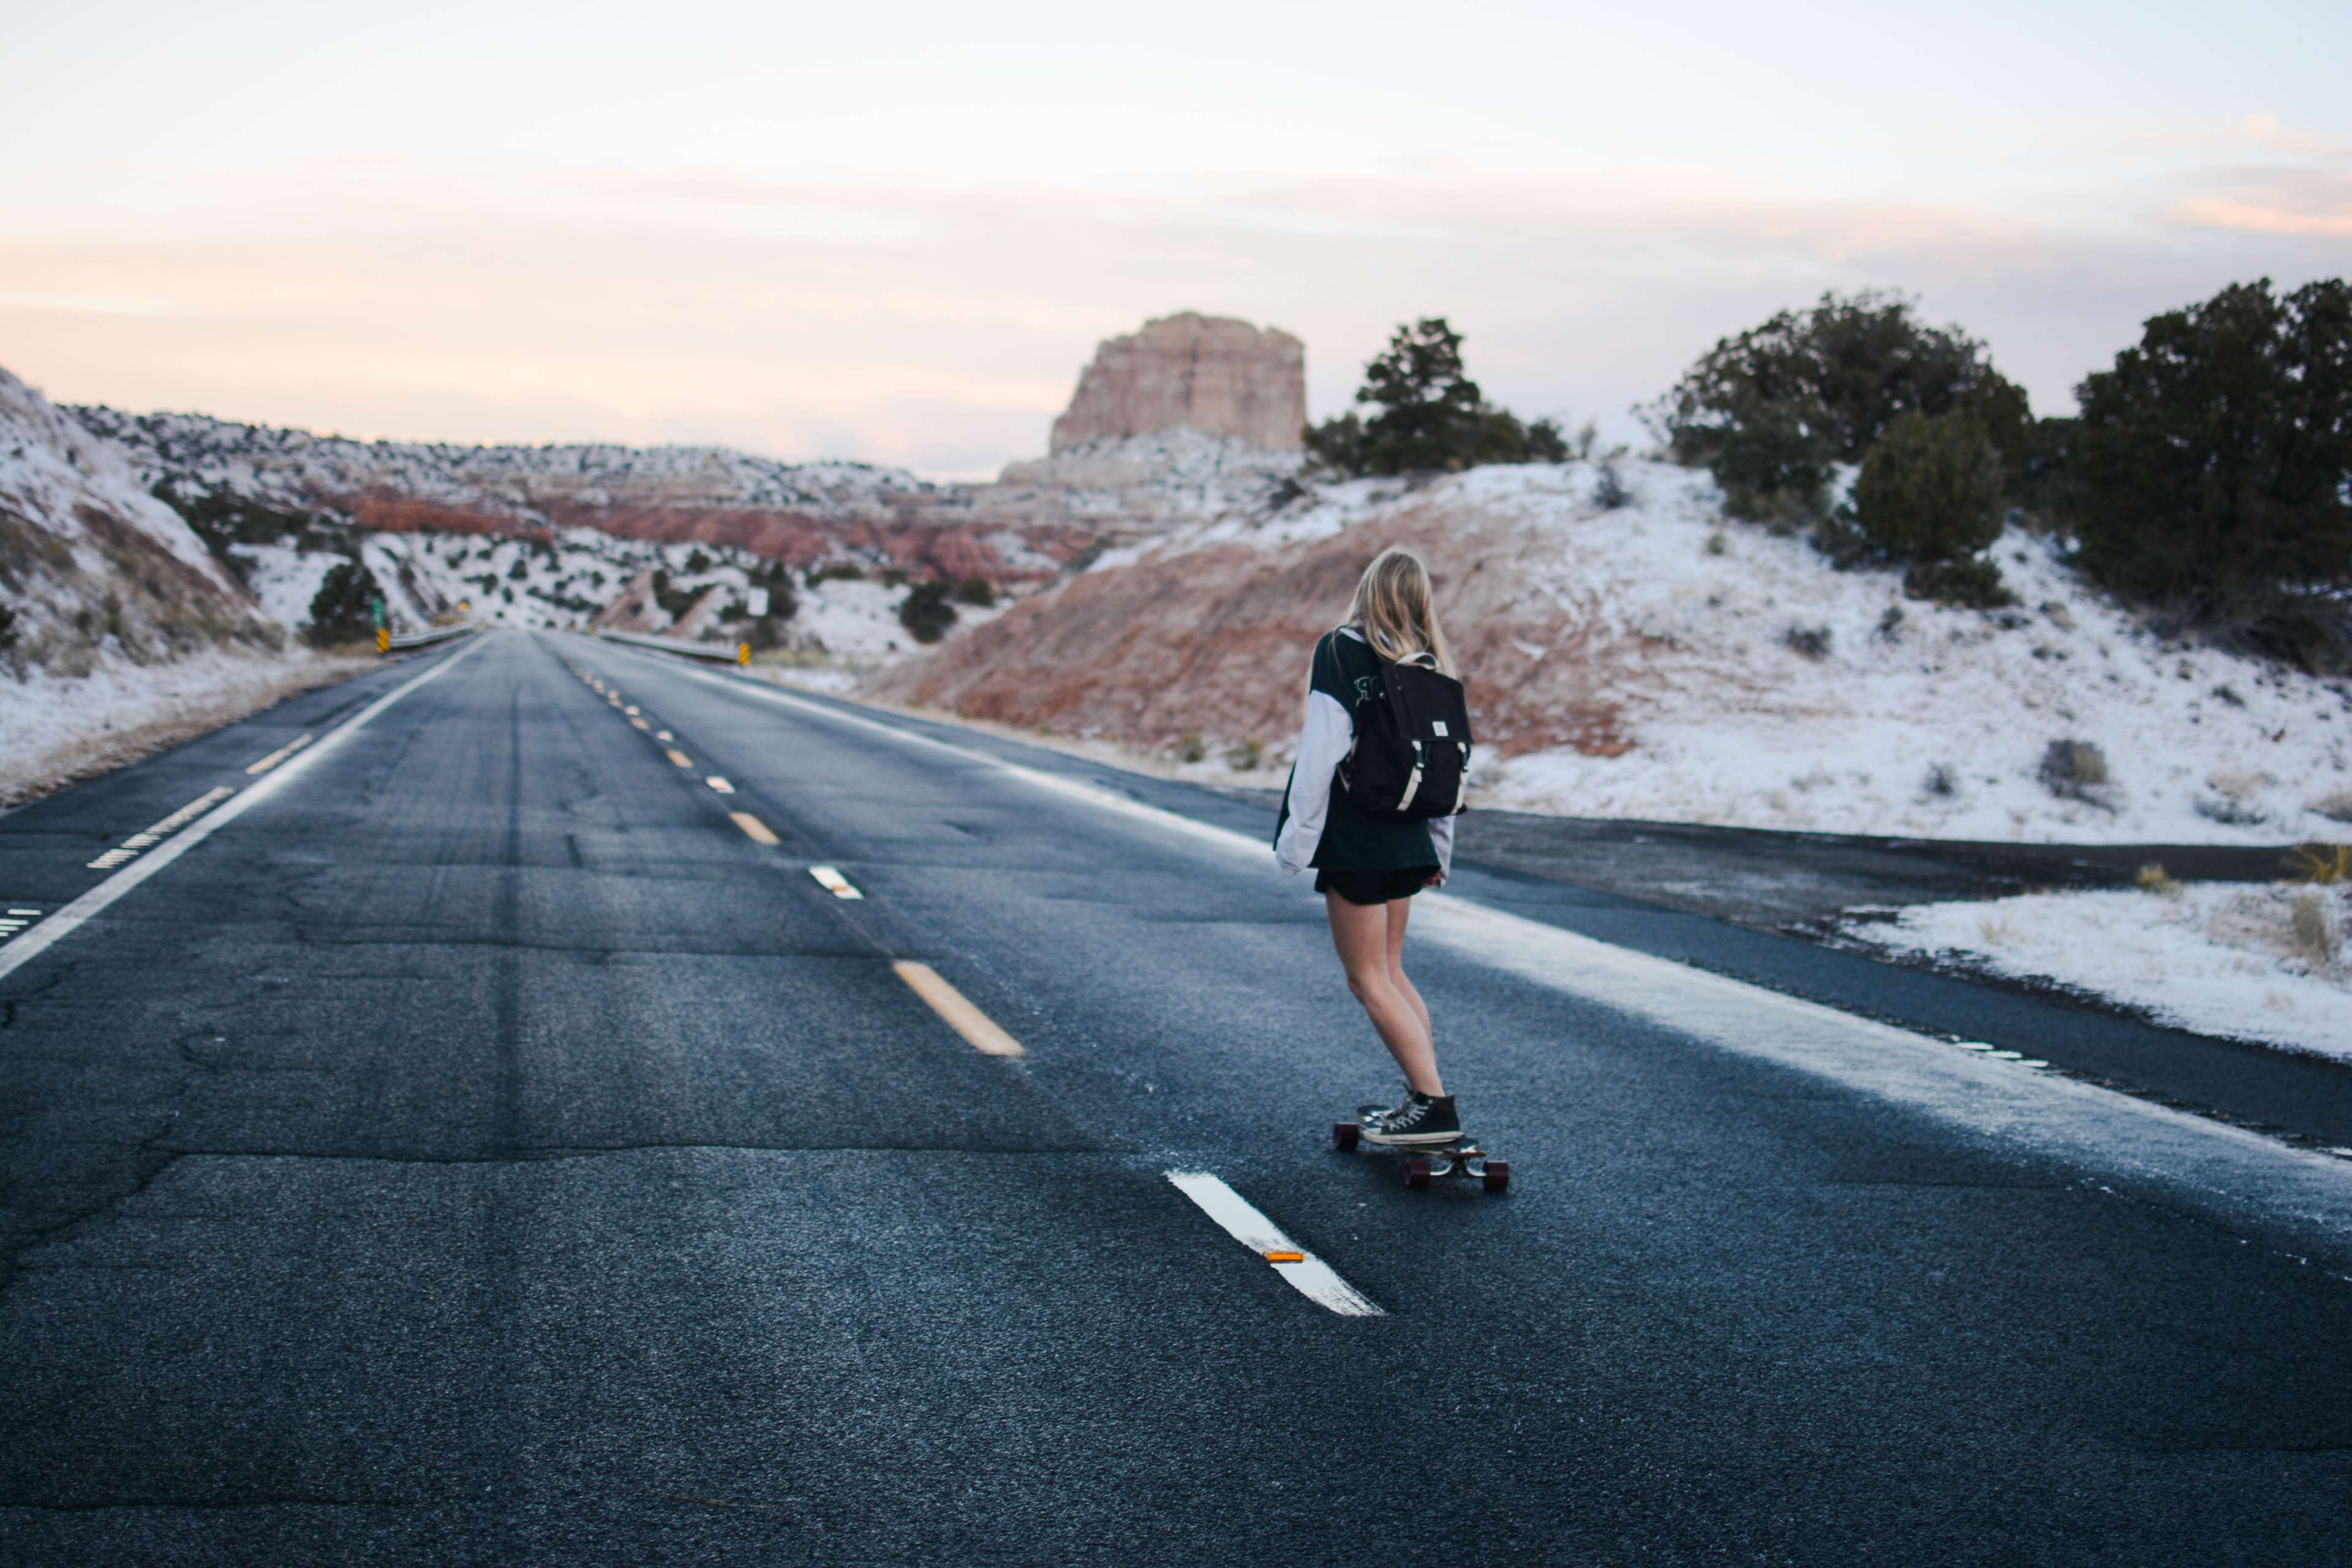 A woman skateboarding down a snowy road - Skater